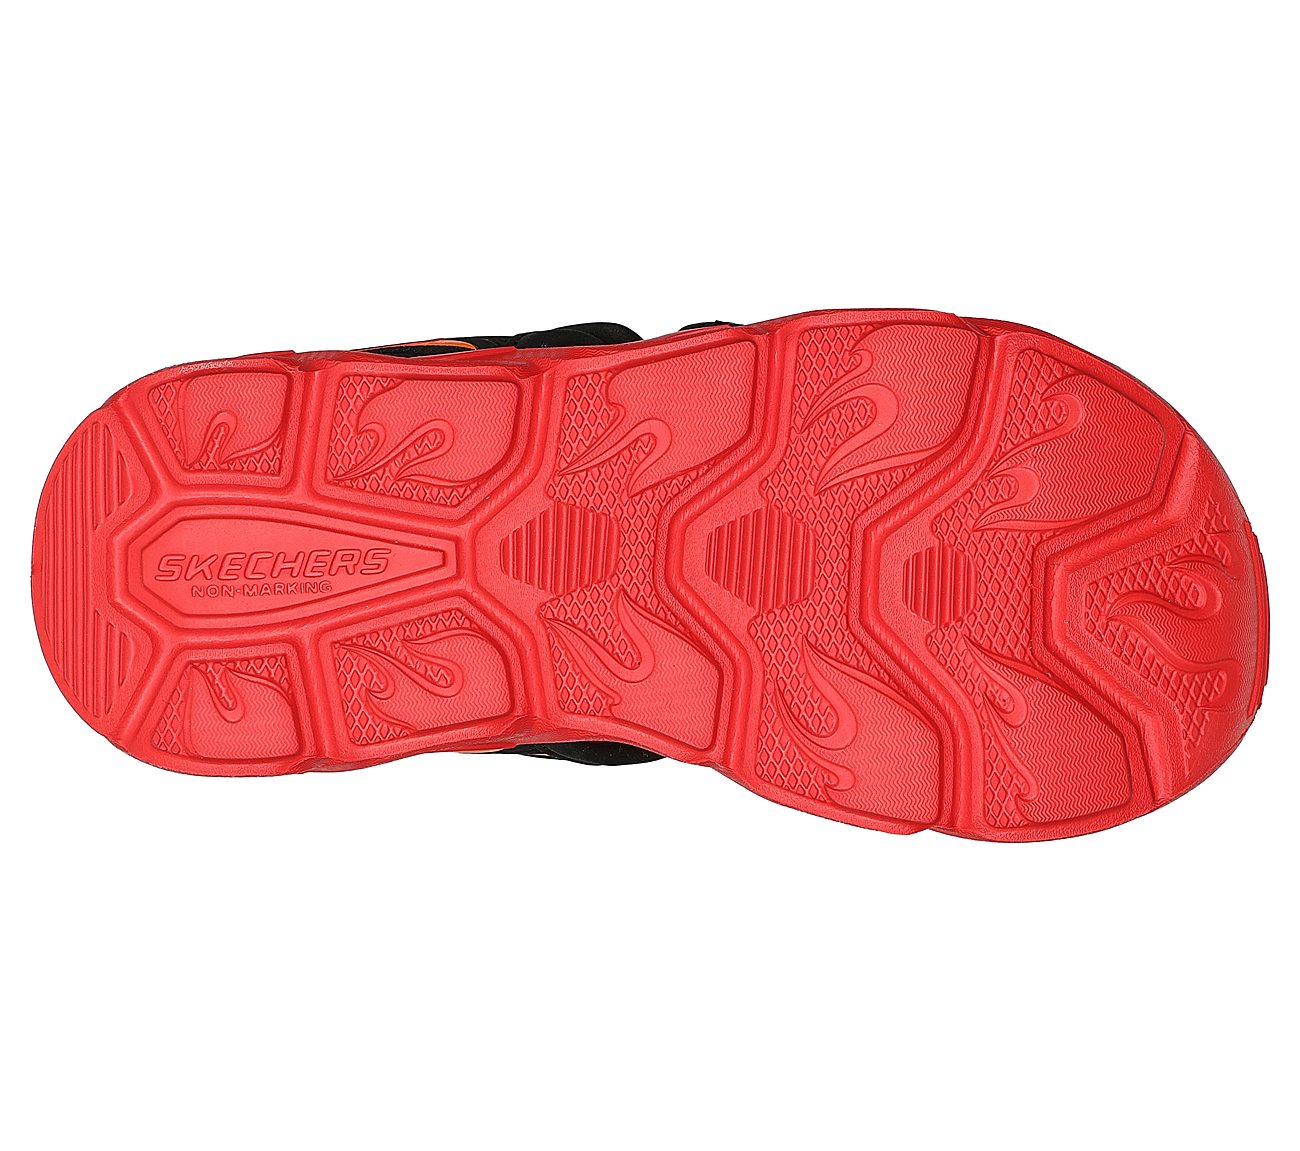 THERMO-SPLASH - HEAT TIDE, BLACK/RED Footwear Bottom View